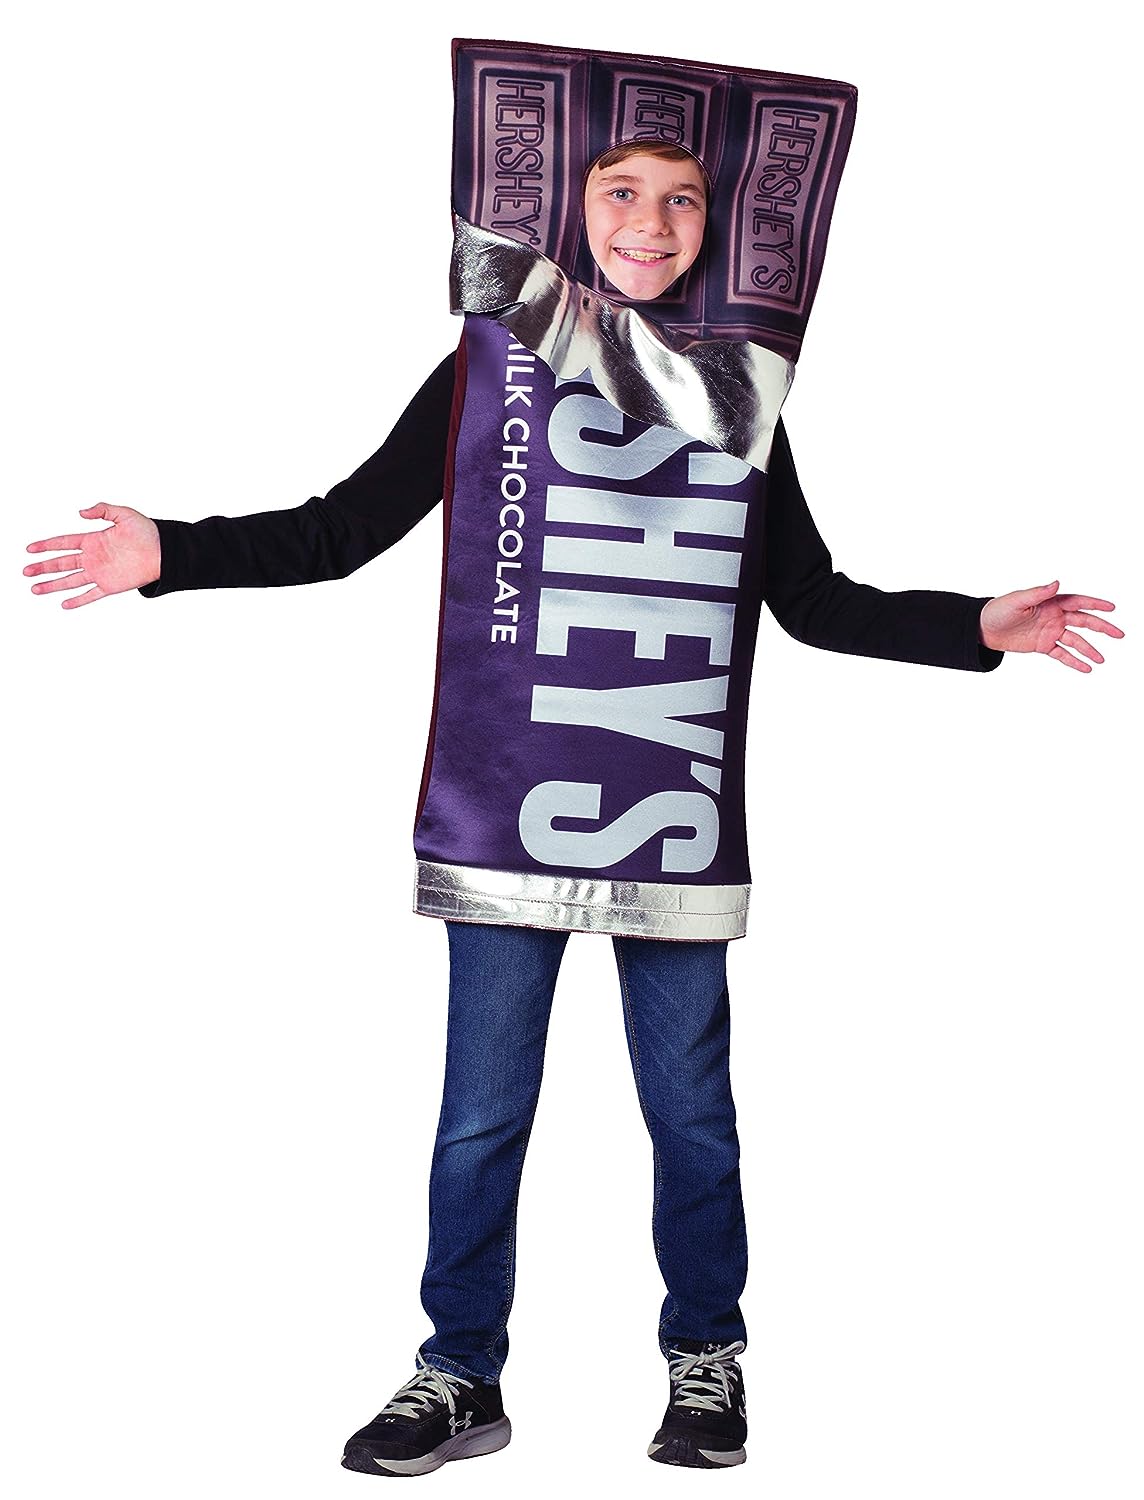 hershey chocolate bar costume, funny halloween costume